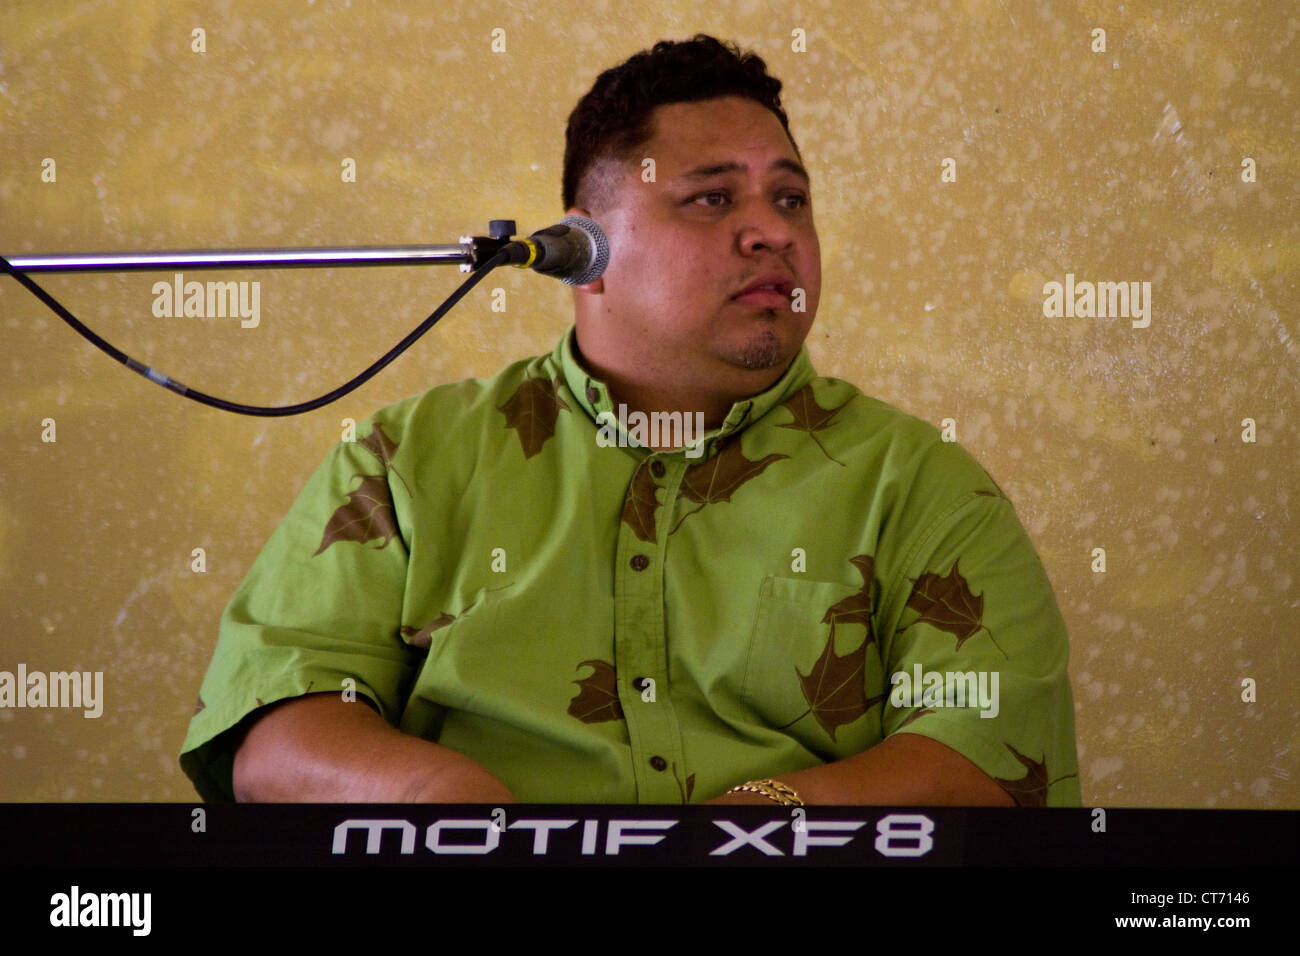 Tuahine Truppe Musiker von University of Hawaii, führt am Smithsonian Folklife Festival 2012. Stockfoto